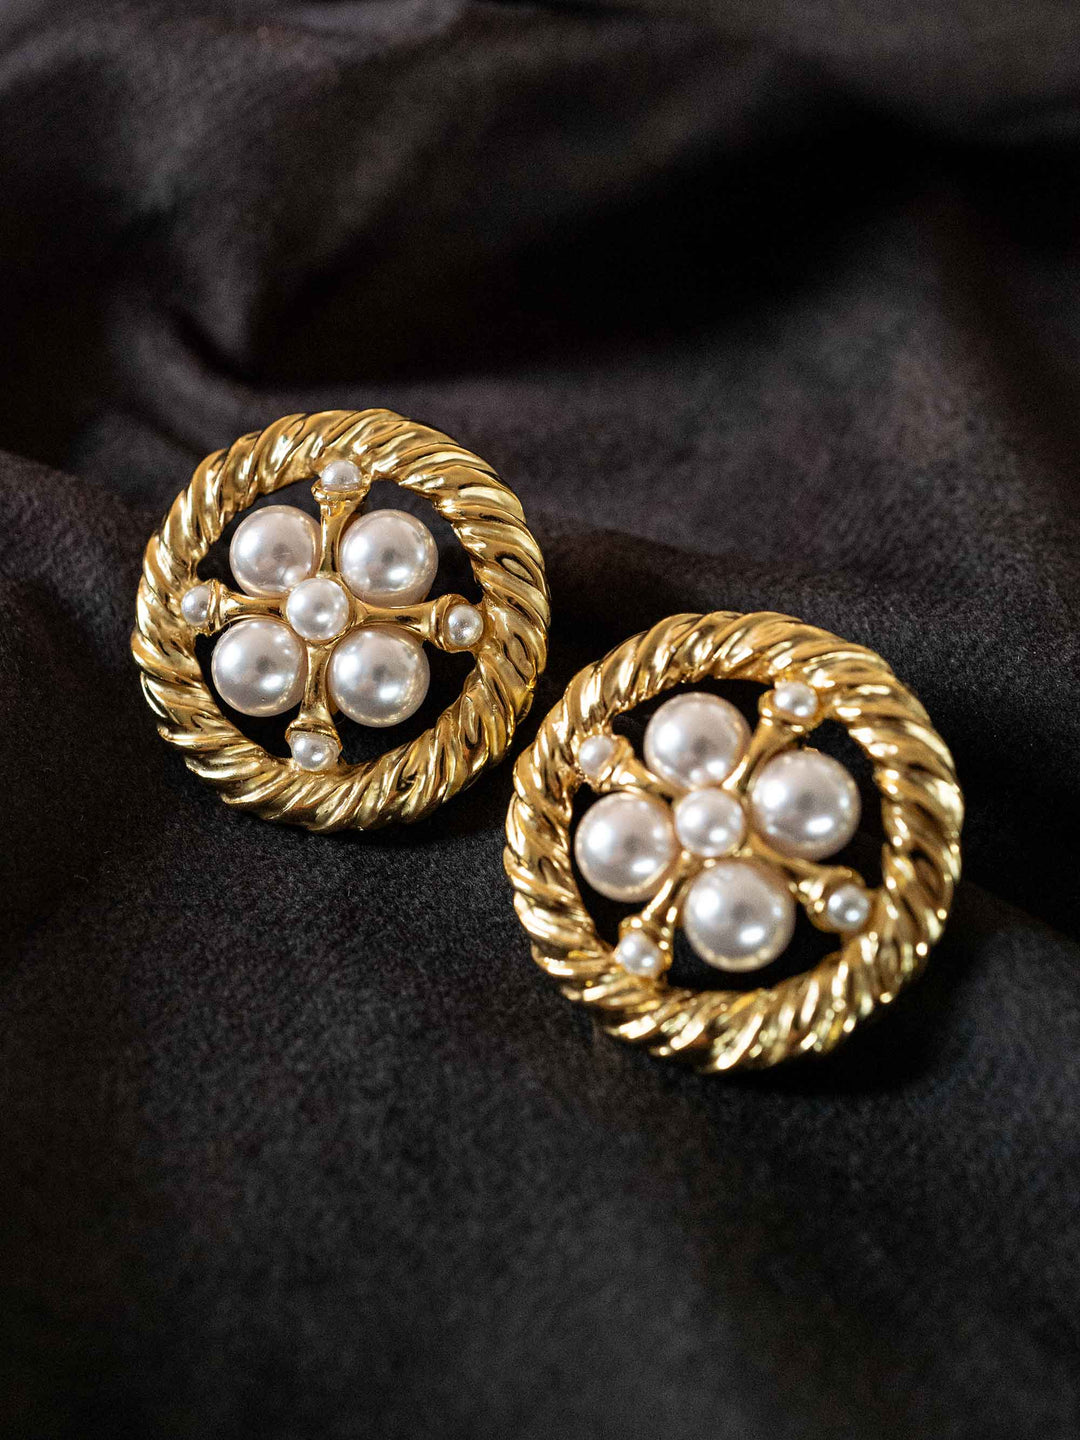 A pair of gold openwork pearl earrings